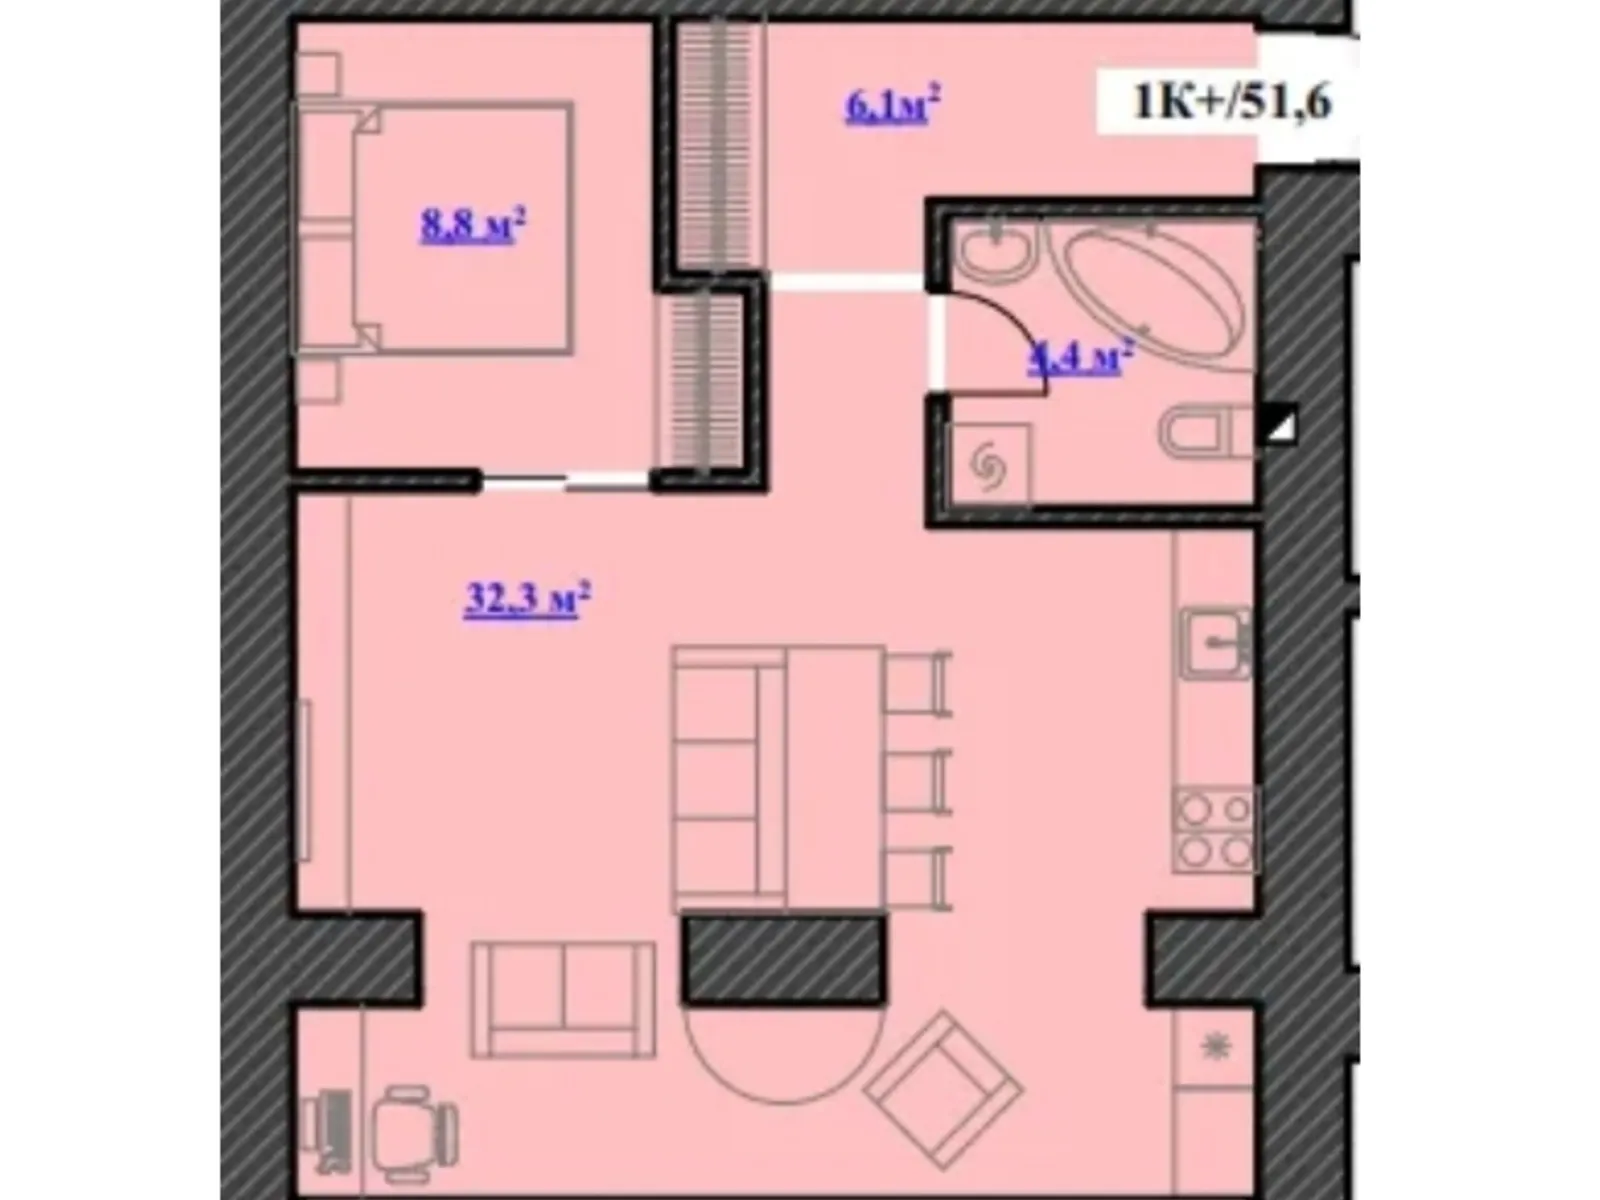 Продается 1-комнатная квартира 51.6 кв. м в Никитинцах, цена: 1264200 грн - фото 1